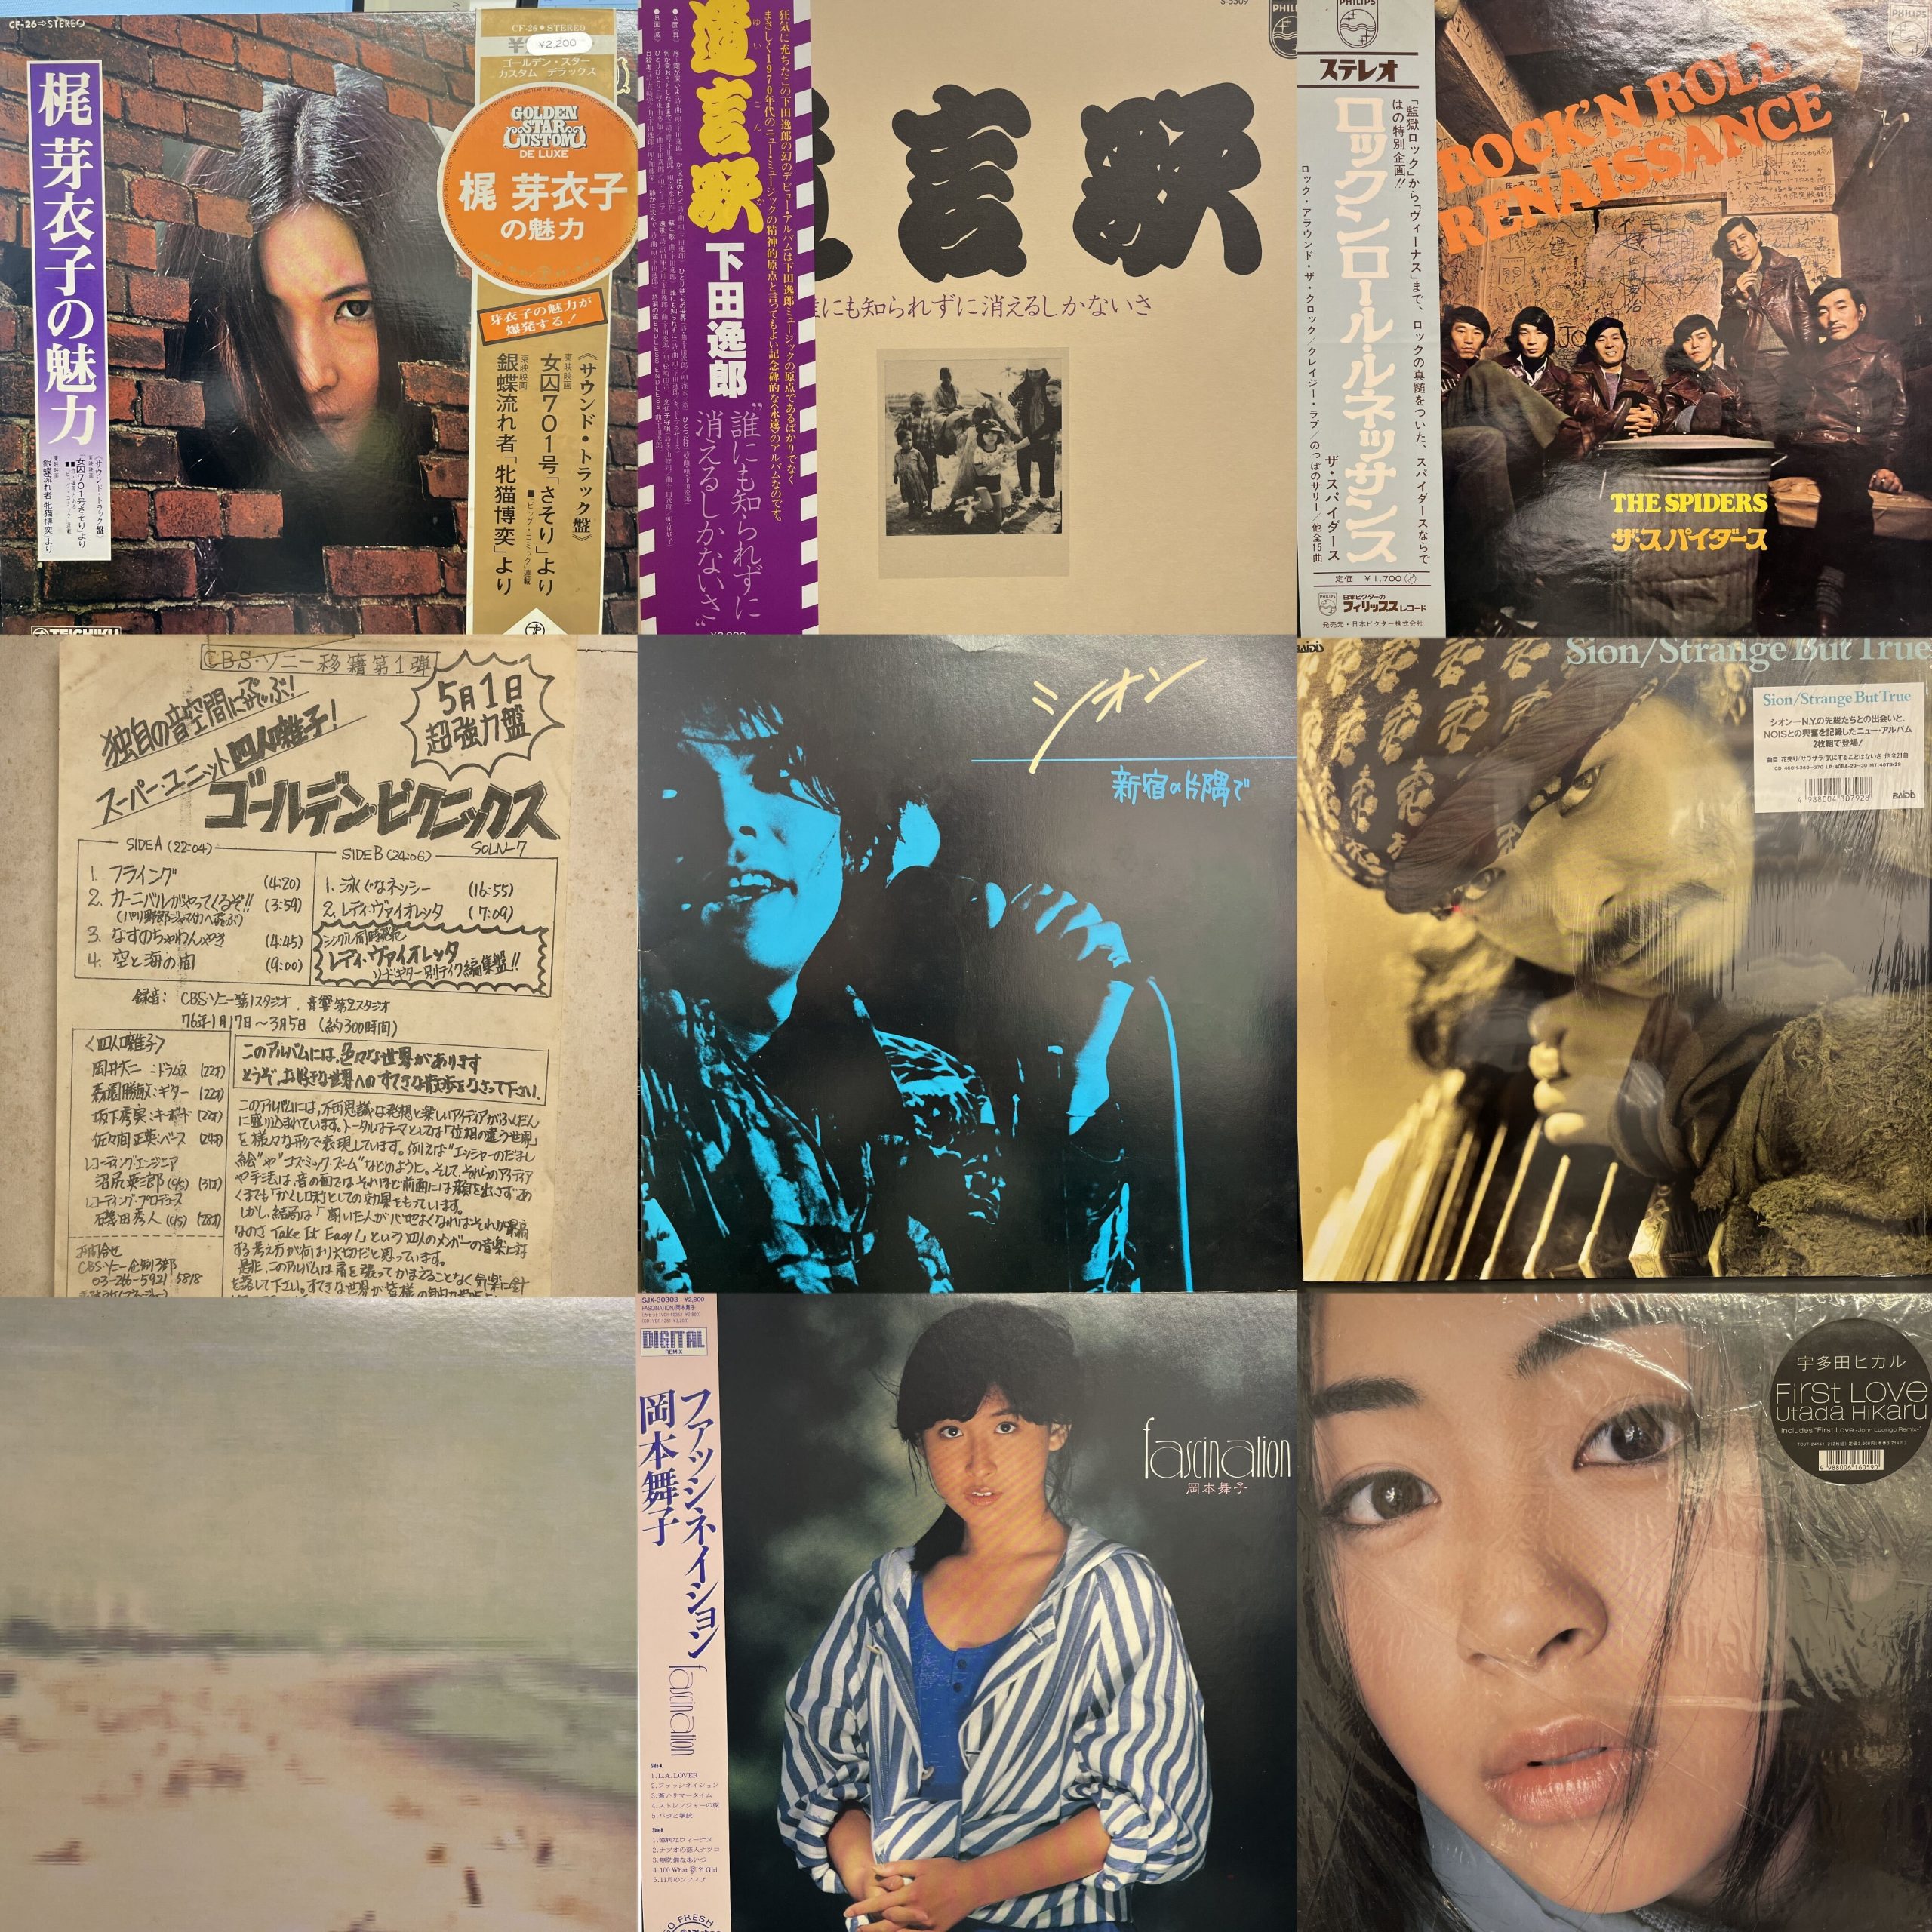 FRI 和モノ LP SALE 約枚 放出!!! – General Record Store